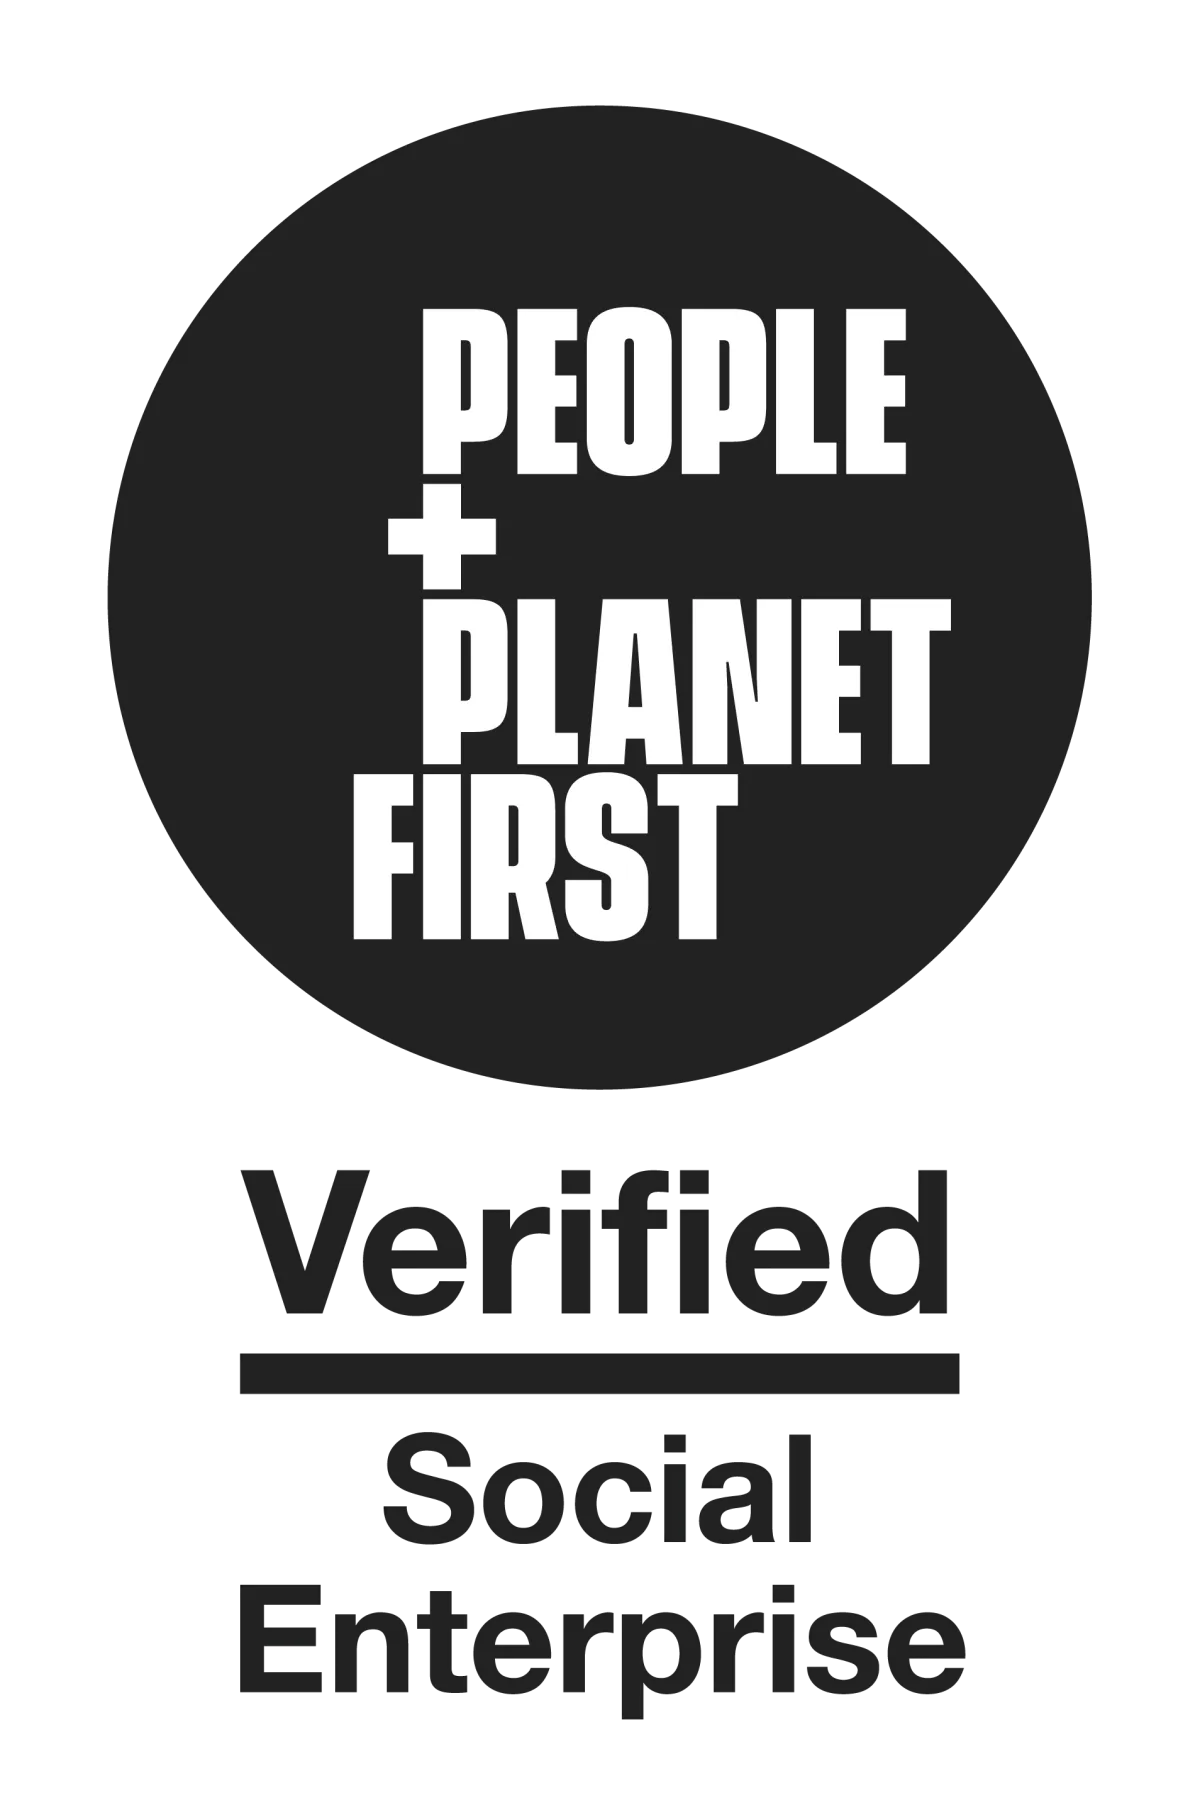 citizen coaching and counselling verified social enterprise logo